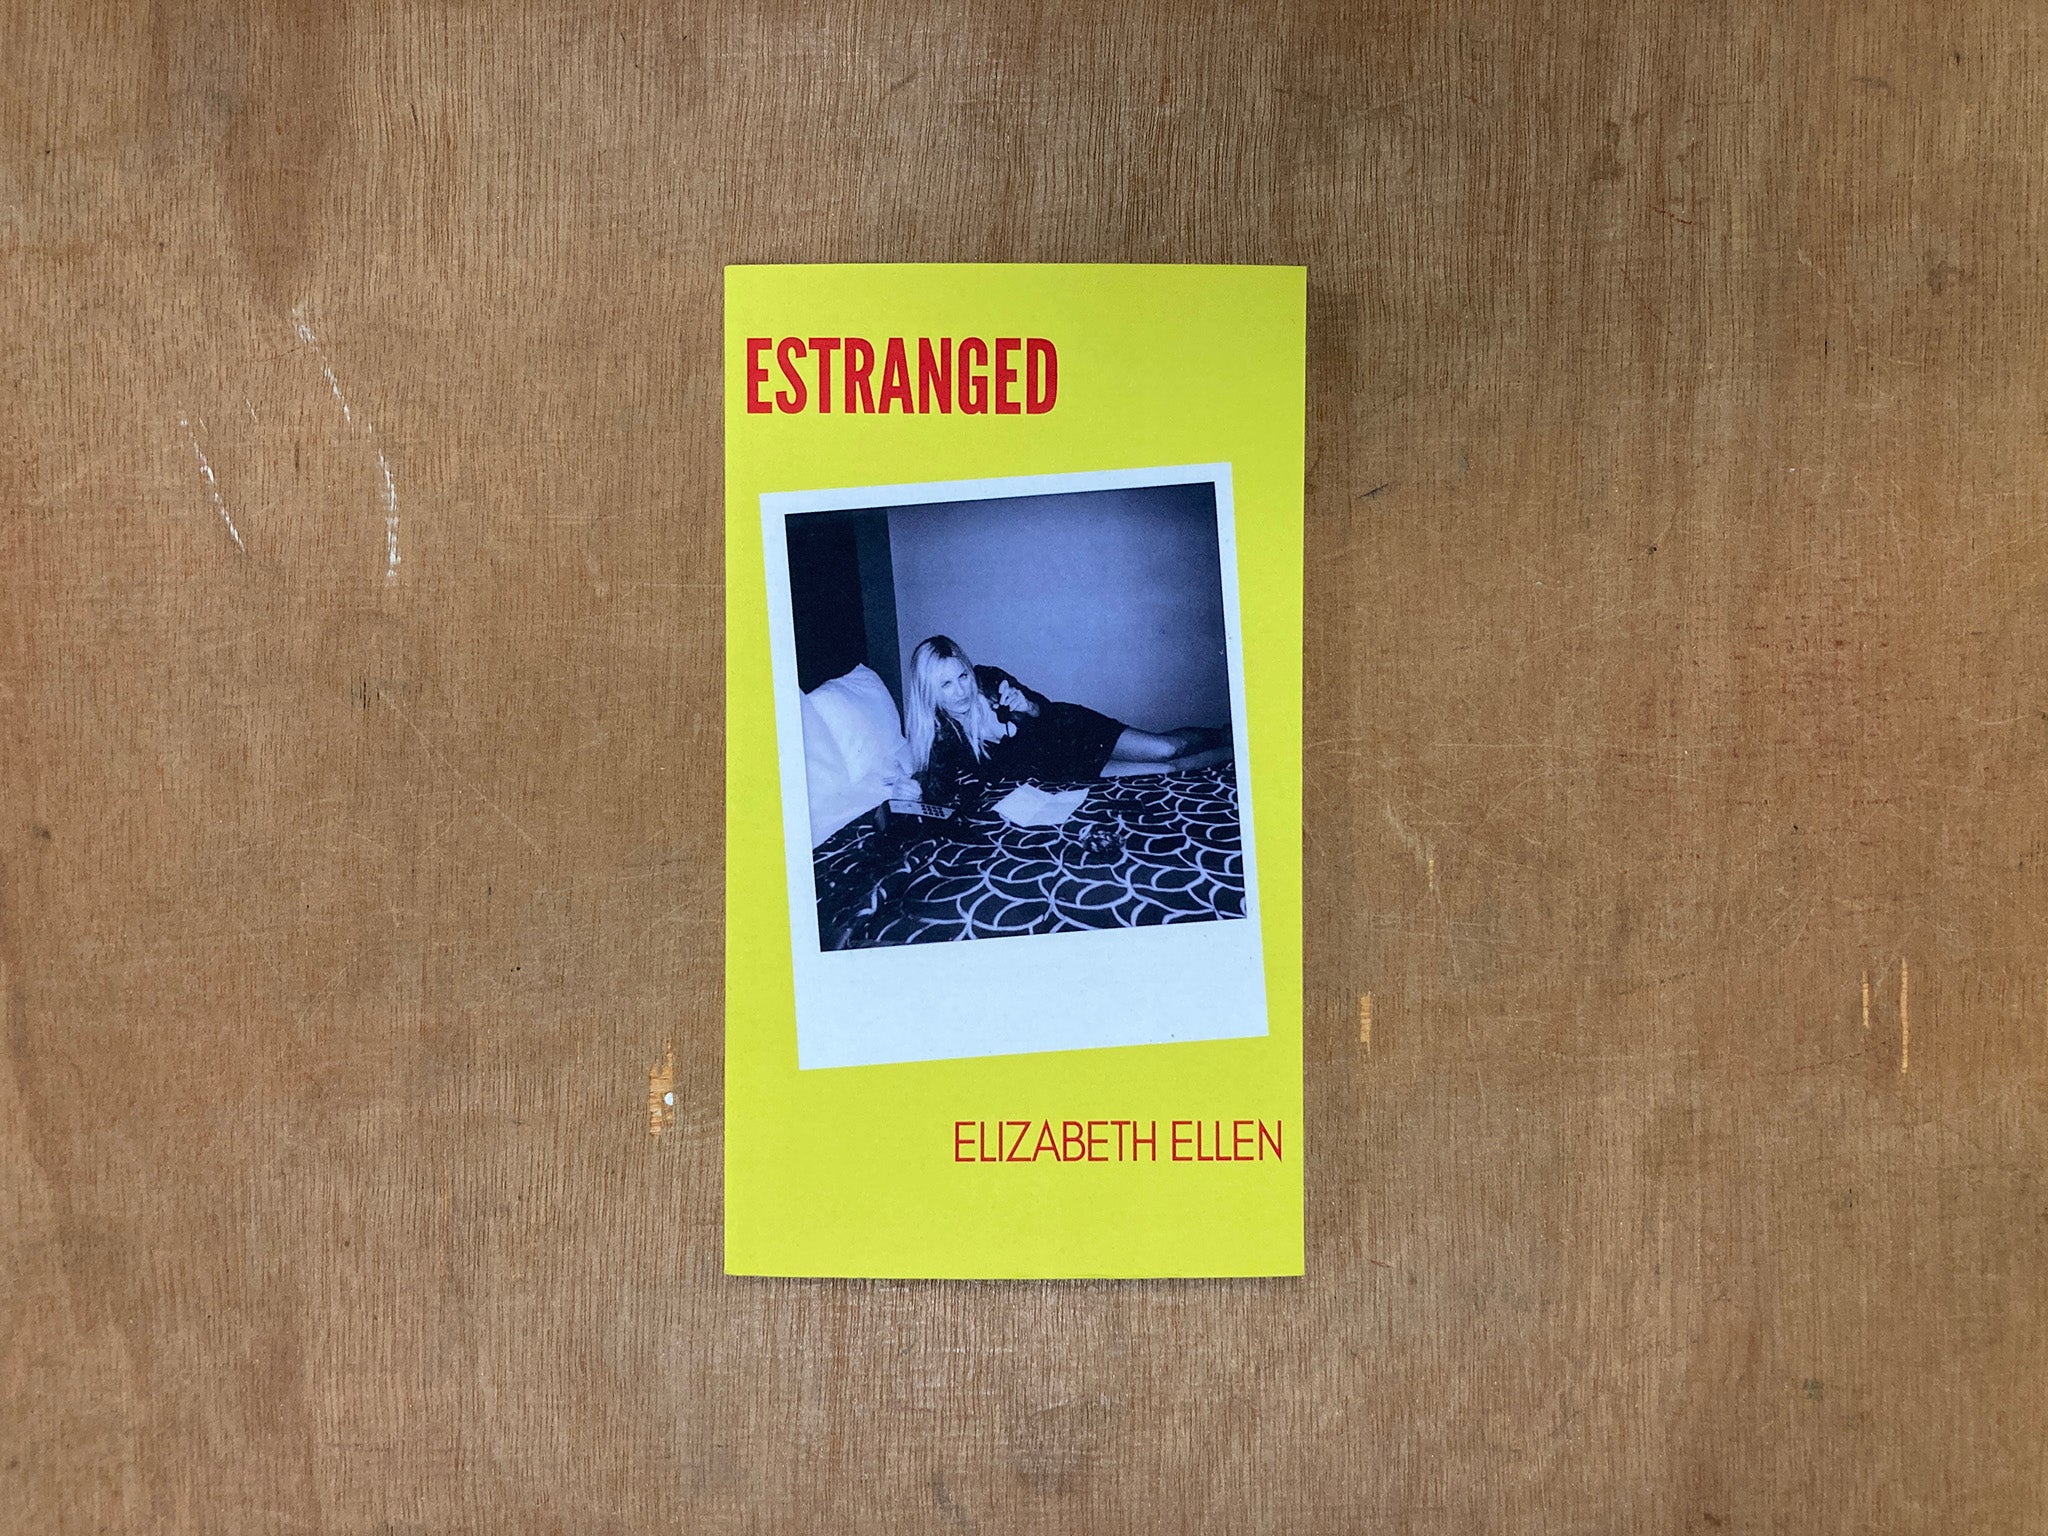 ESTRANGED by Elizabeth Ellen